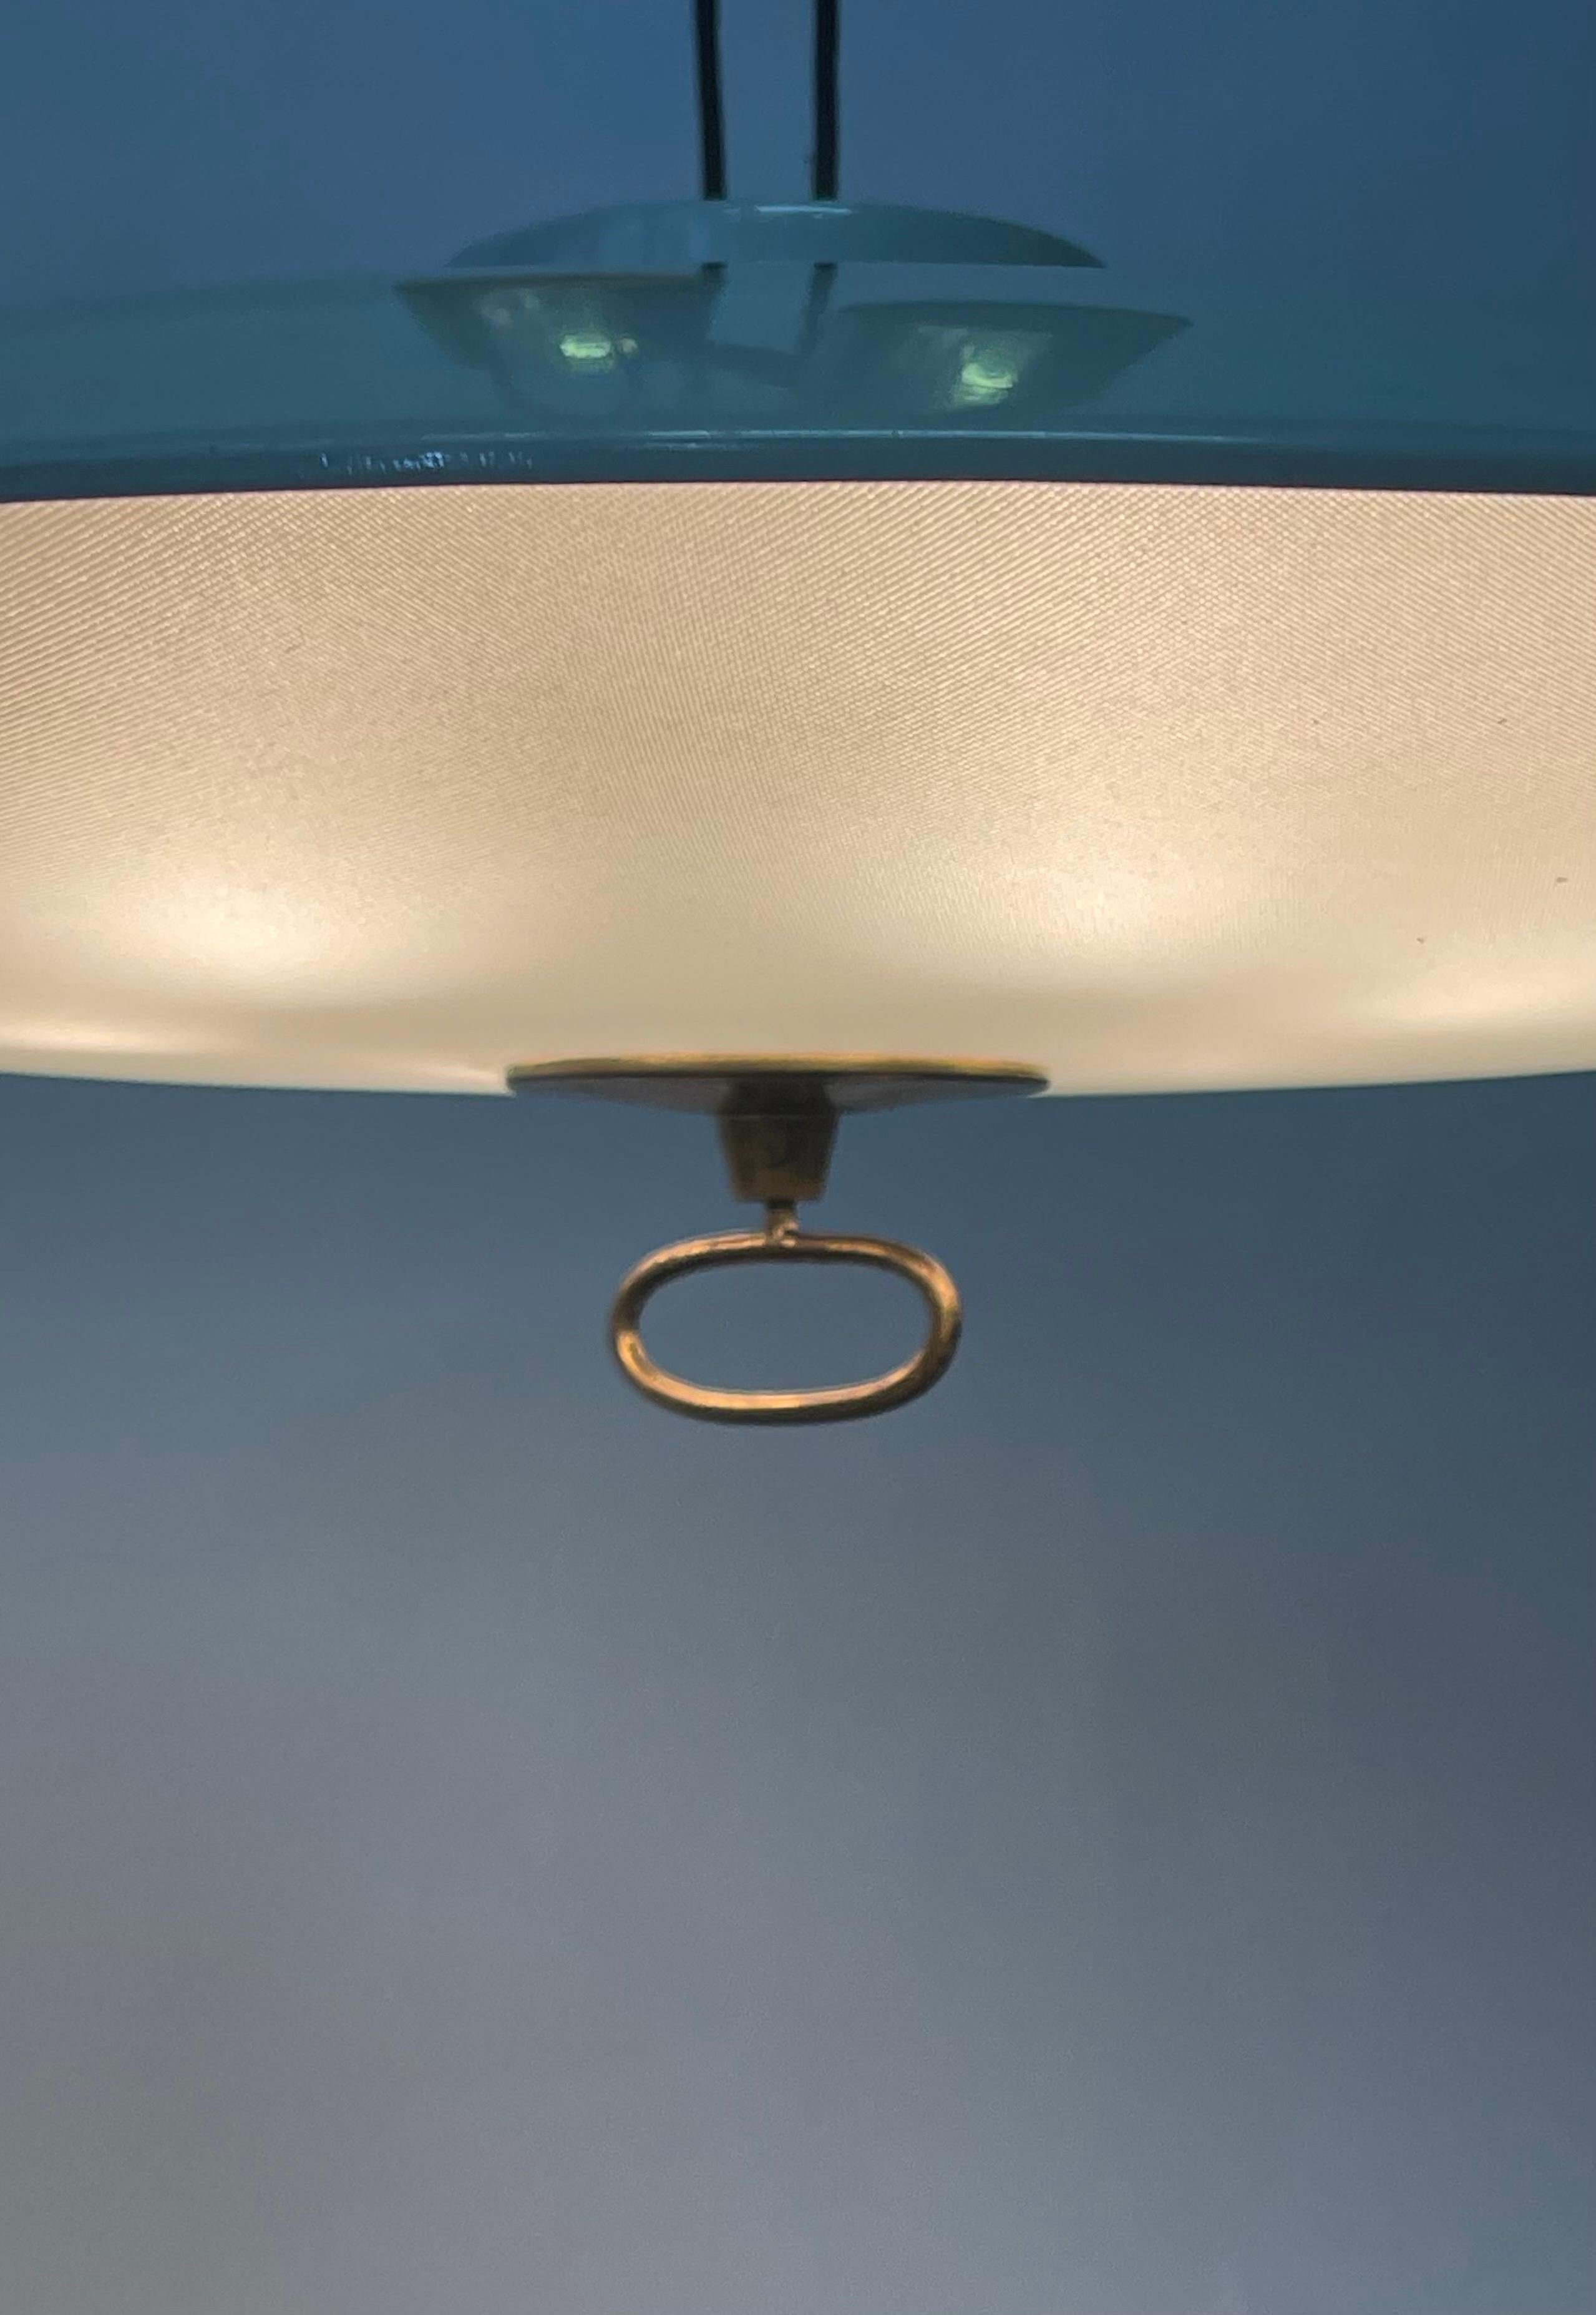 Glass Rare Suspension Lamp Mod.1953 by Max Ingrand for Fontana Arte, Italy circa 1950s